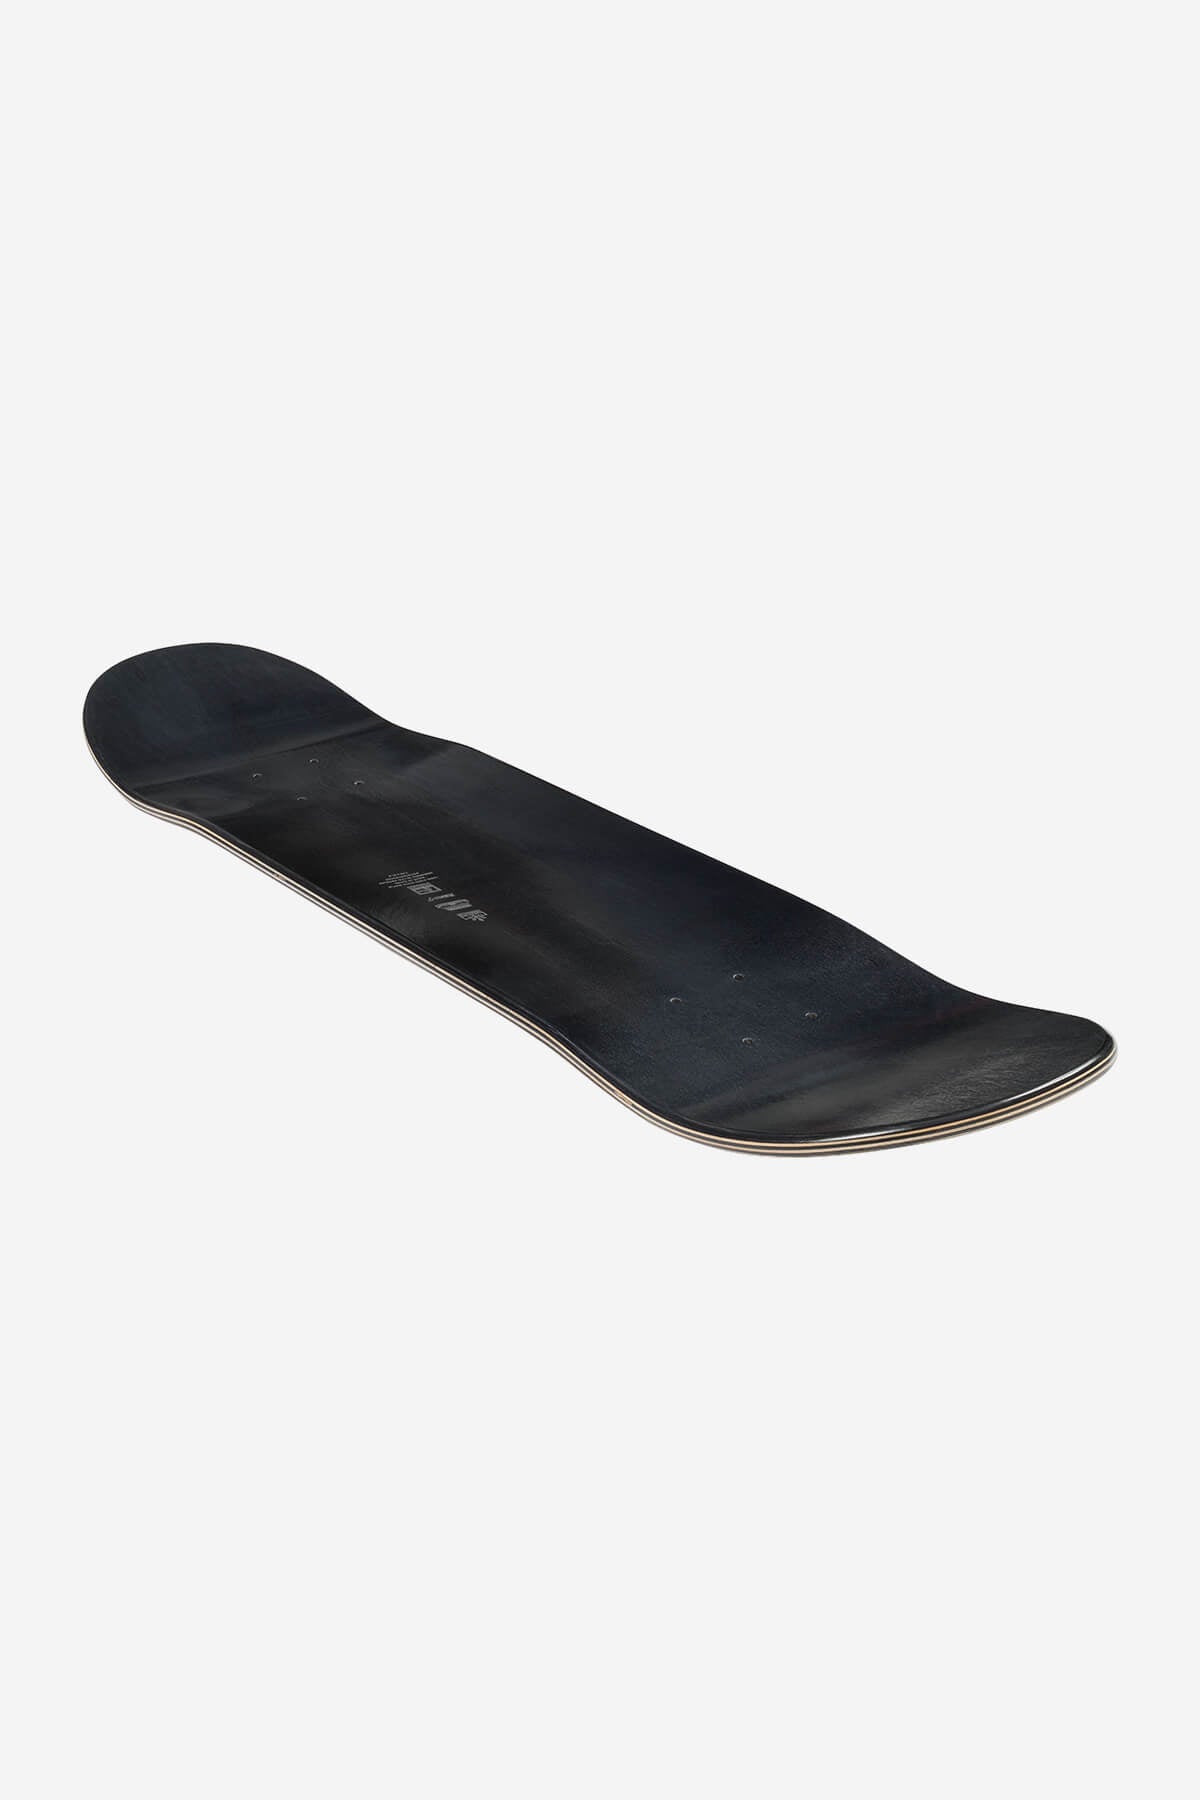 Globe Decks G1 Lineform Skateboard Deck  7.75" in Black